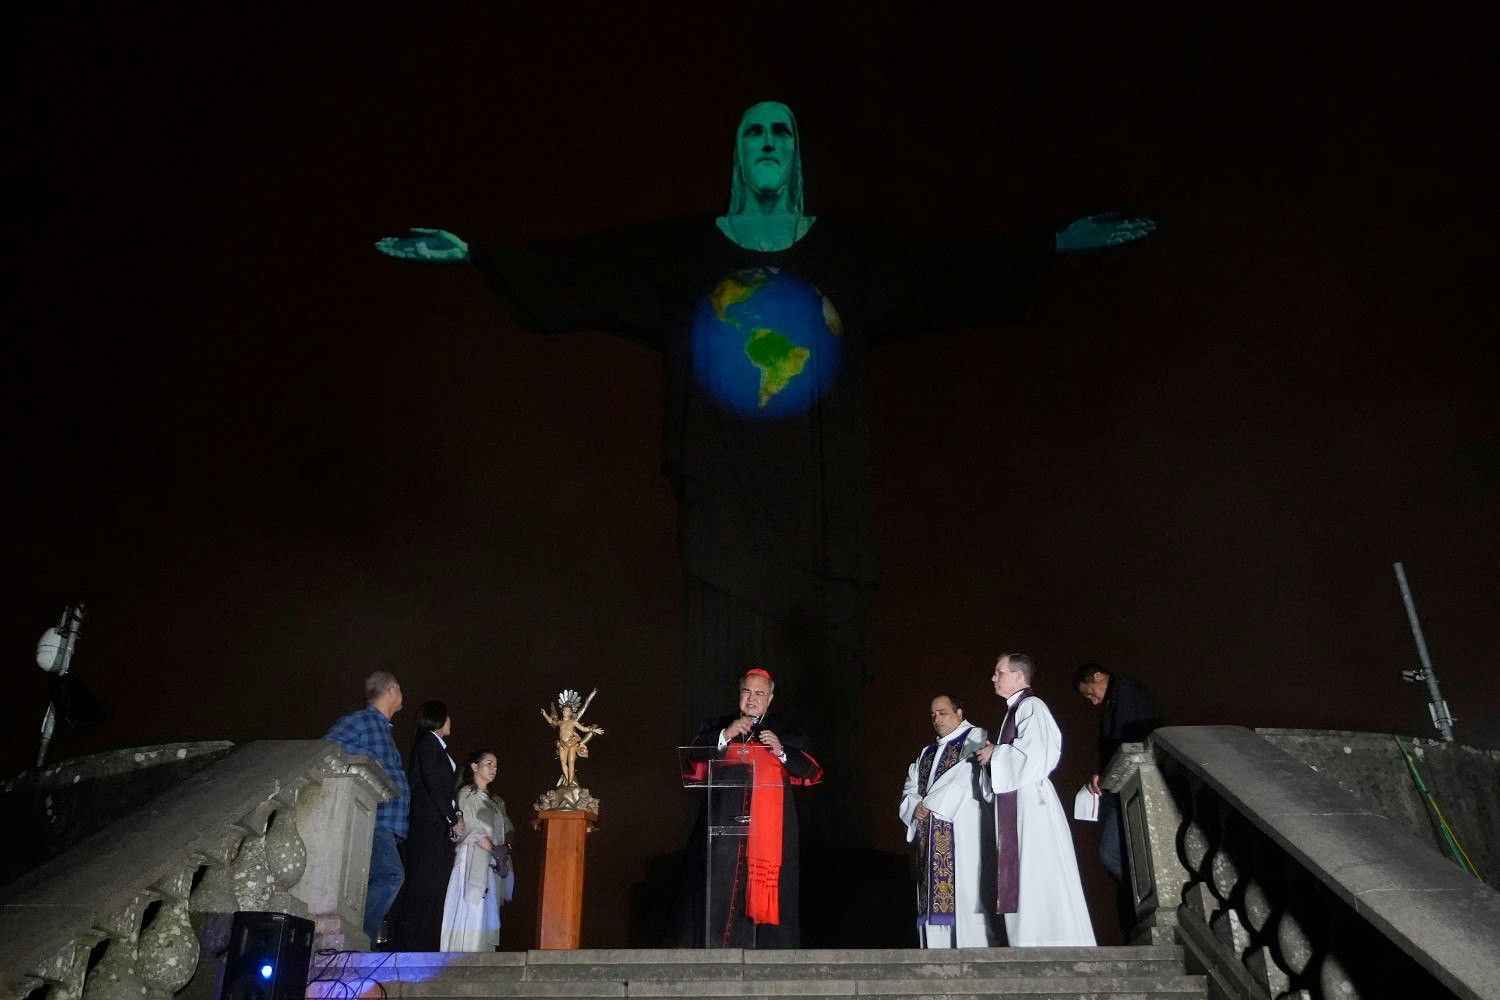 Archbishop of Rio de Janeiro, Dom Orani Tempesta, performs a mass at the illuminated statue of Christ the Redeemer in Rio de Janeiro